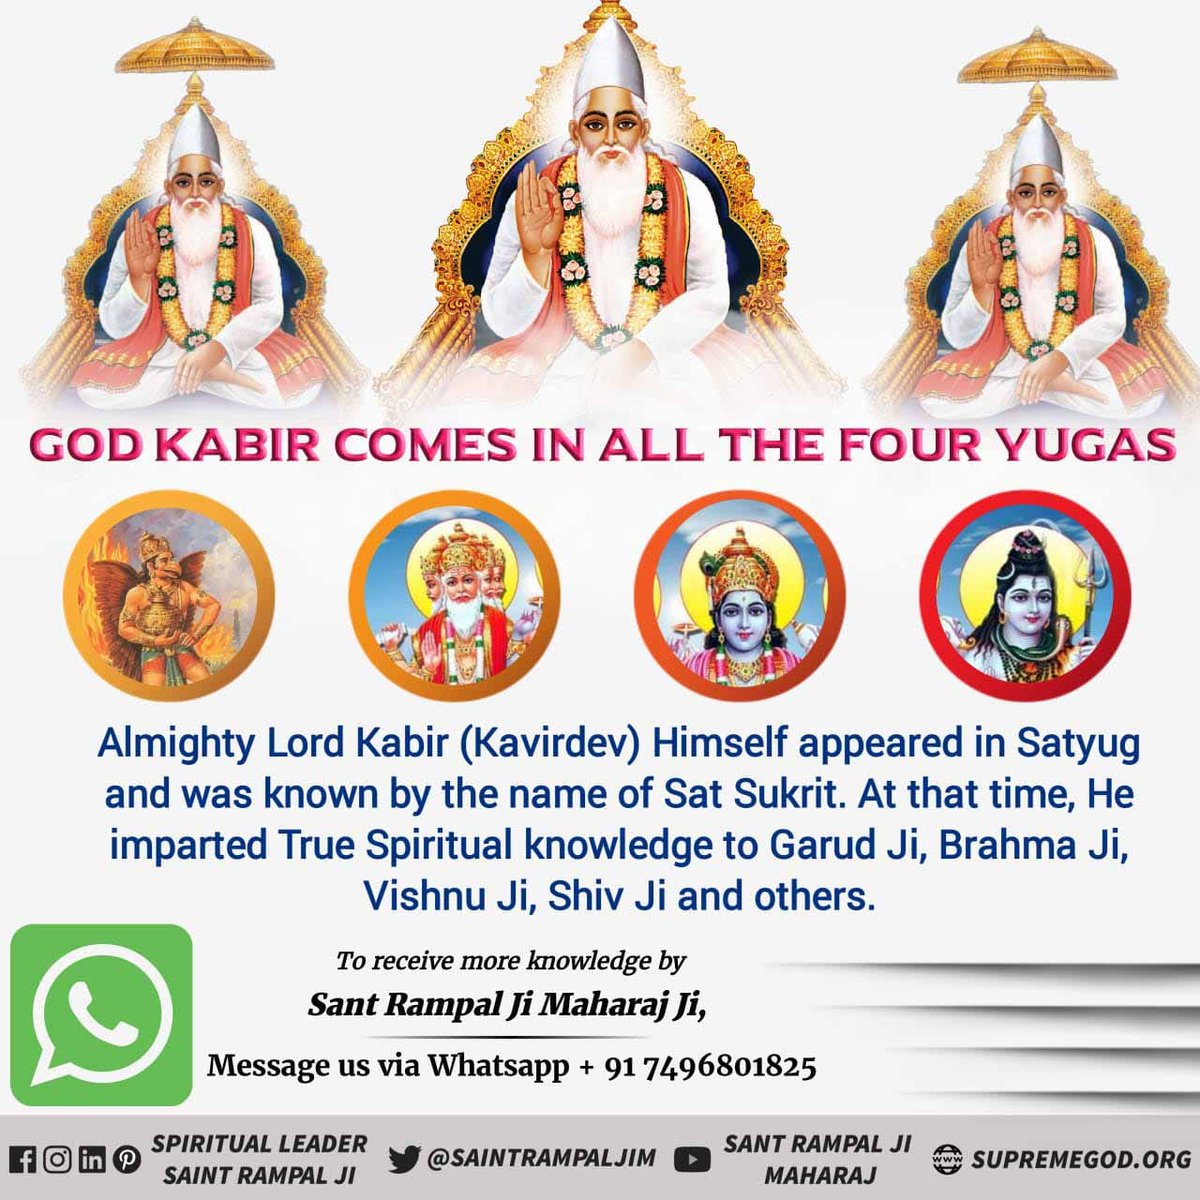 #राधास्वामी_पंथ_की_सच्चाई
#GodMorningMonday
Almighty Lord Kabir (Kavirdev) Himself appeared in Satyug and was known by the name of Sat Sukrit. At that time, He imparted True Spiritual knowledge to Garud Ji, Brahma Ji, Vishnu Ji, Shiv Ji and others.